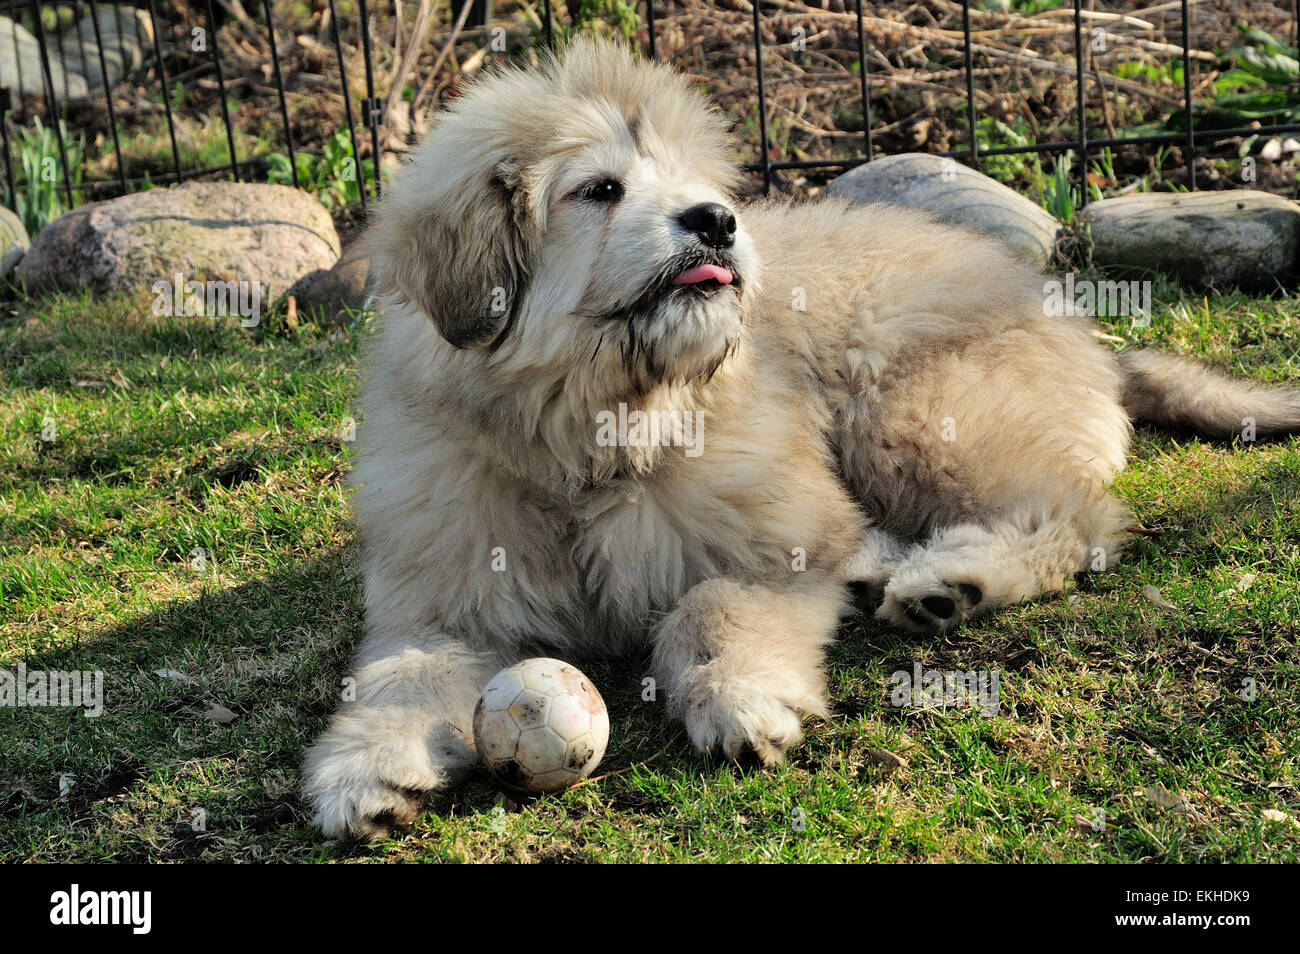 Great Pyranees and Anatolian Shepard mix puppy named Chloe. Stock Photo